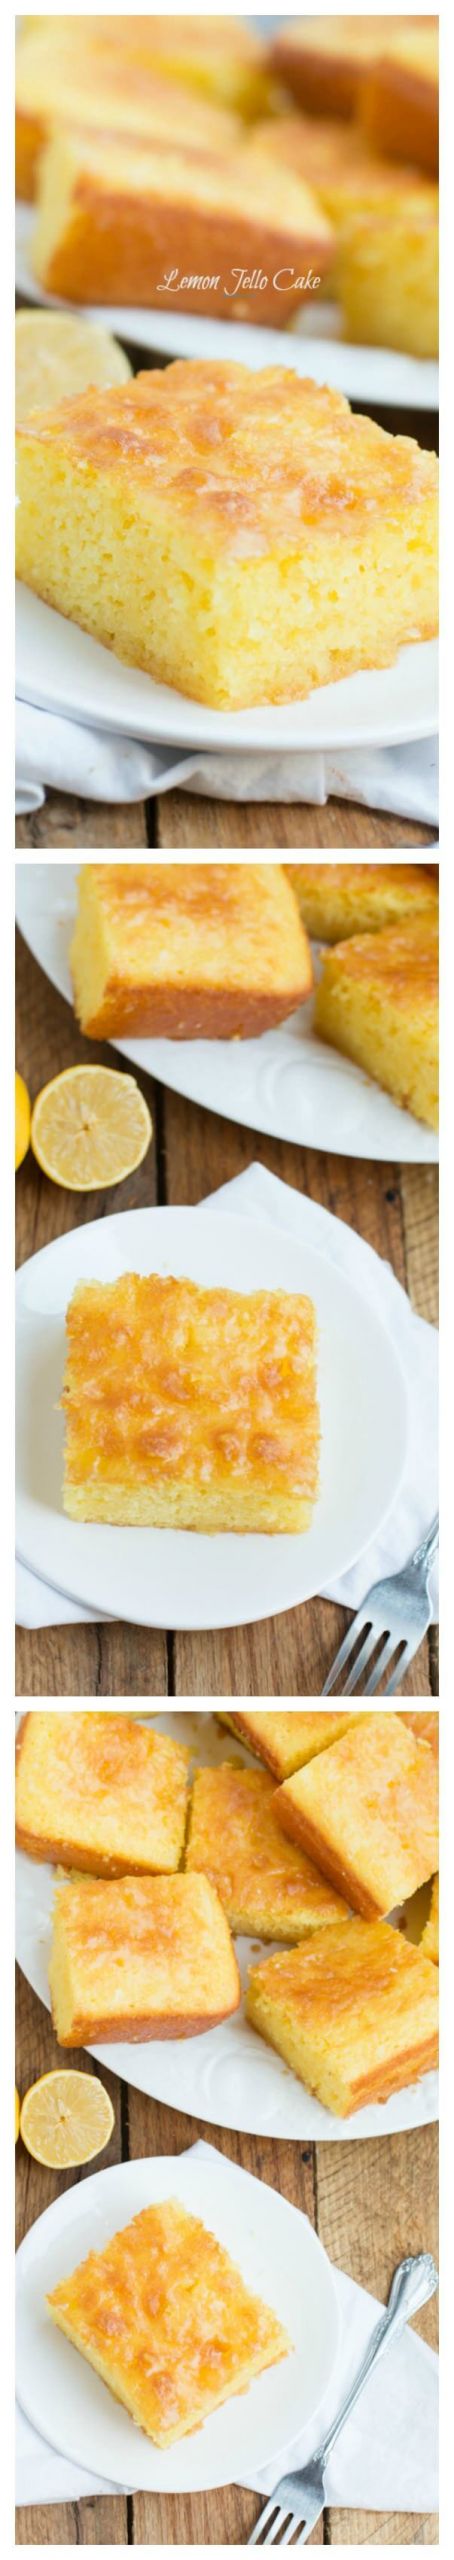 Lemon Jello Cake
 This Best Lemon Jello Cake Recipe Oh Sweet Basil